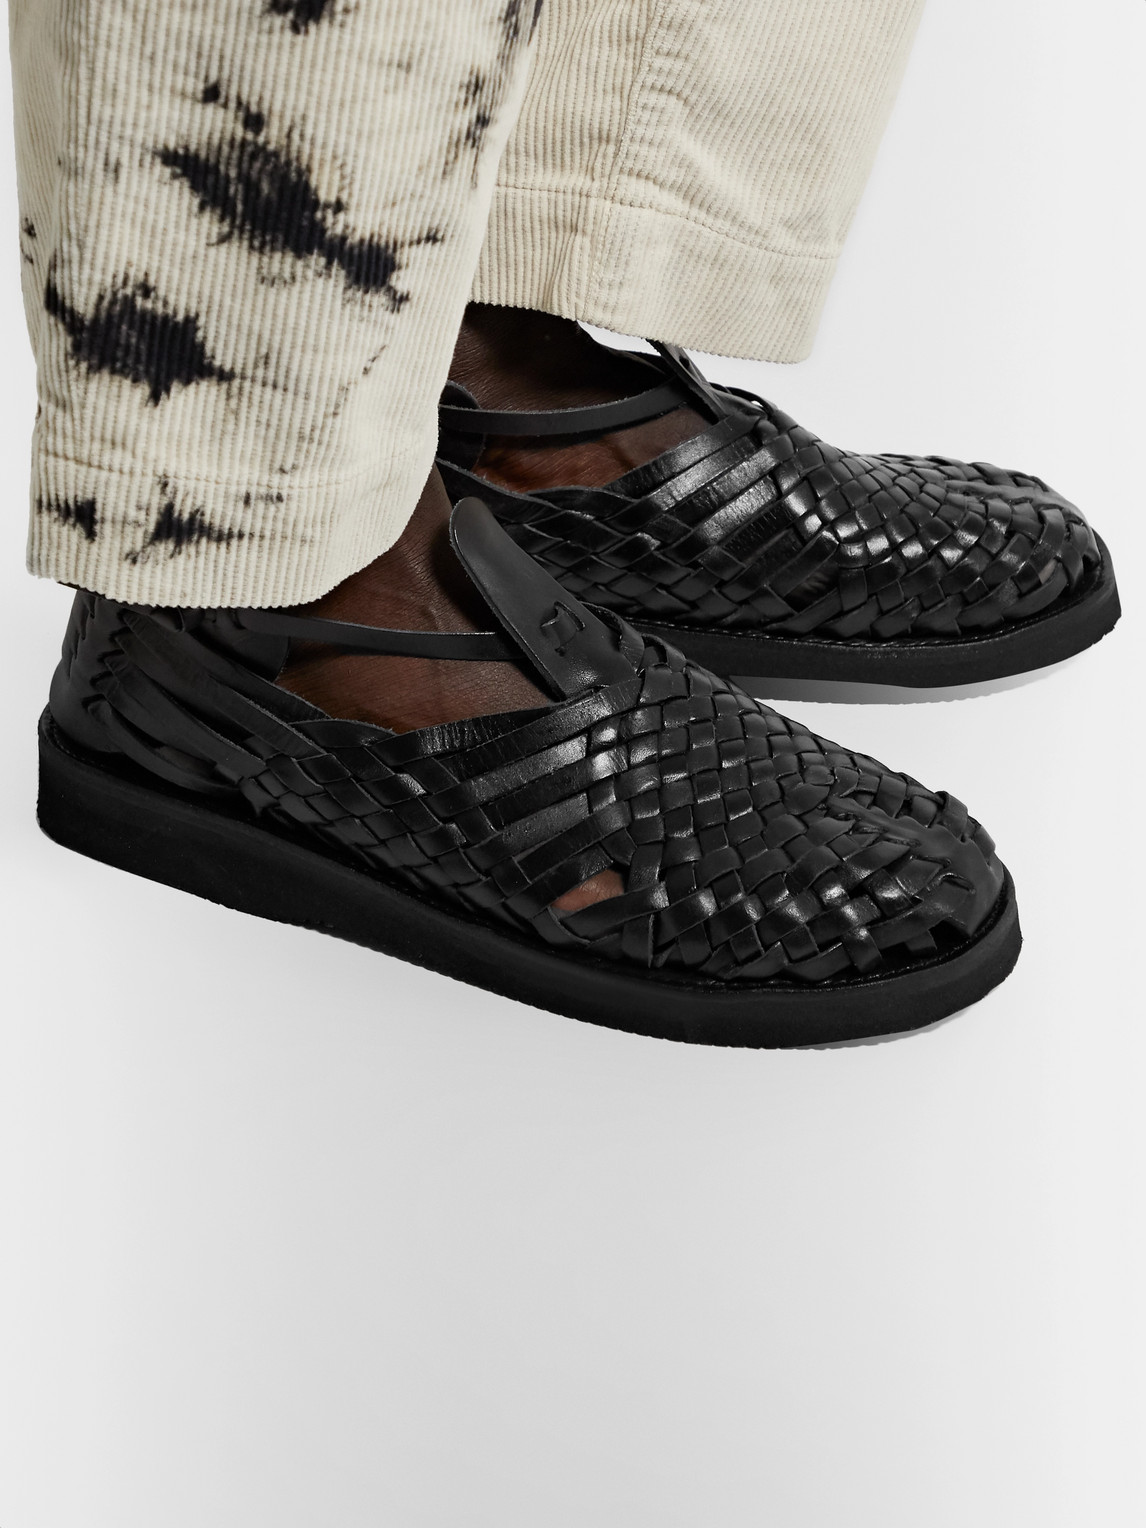 Yuketen Crus Woven Leather Sandals In Black